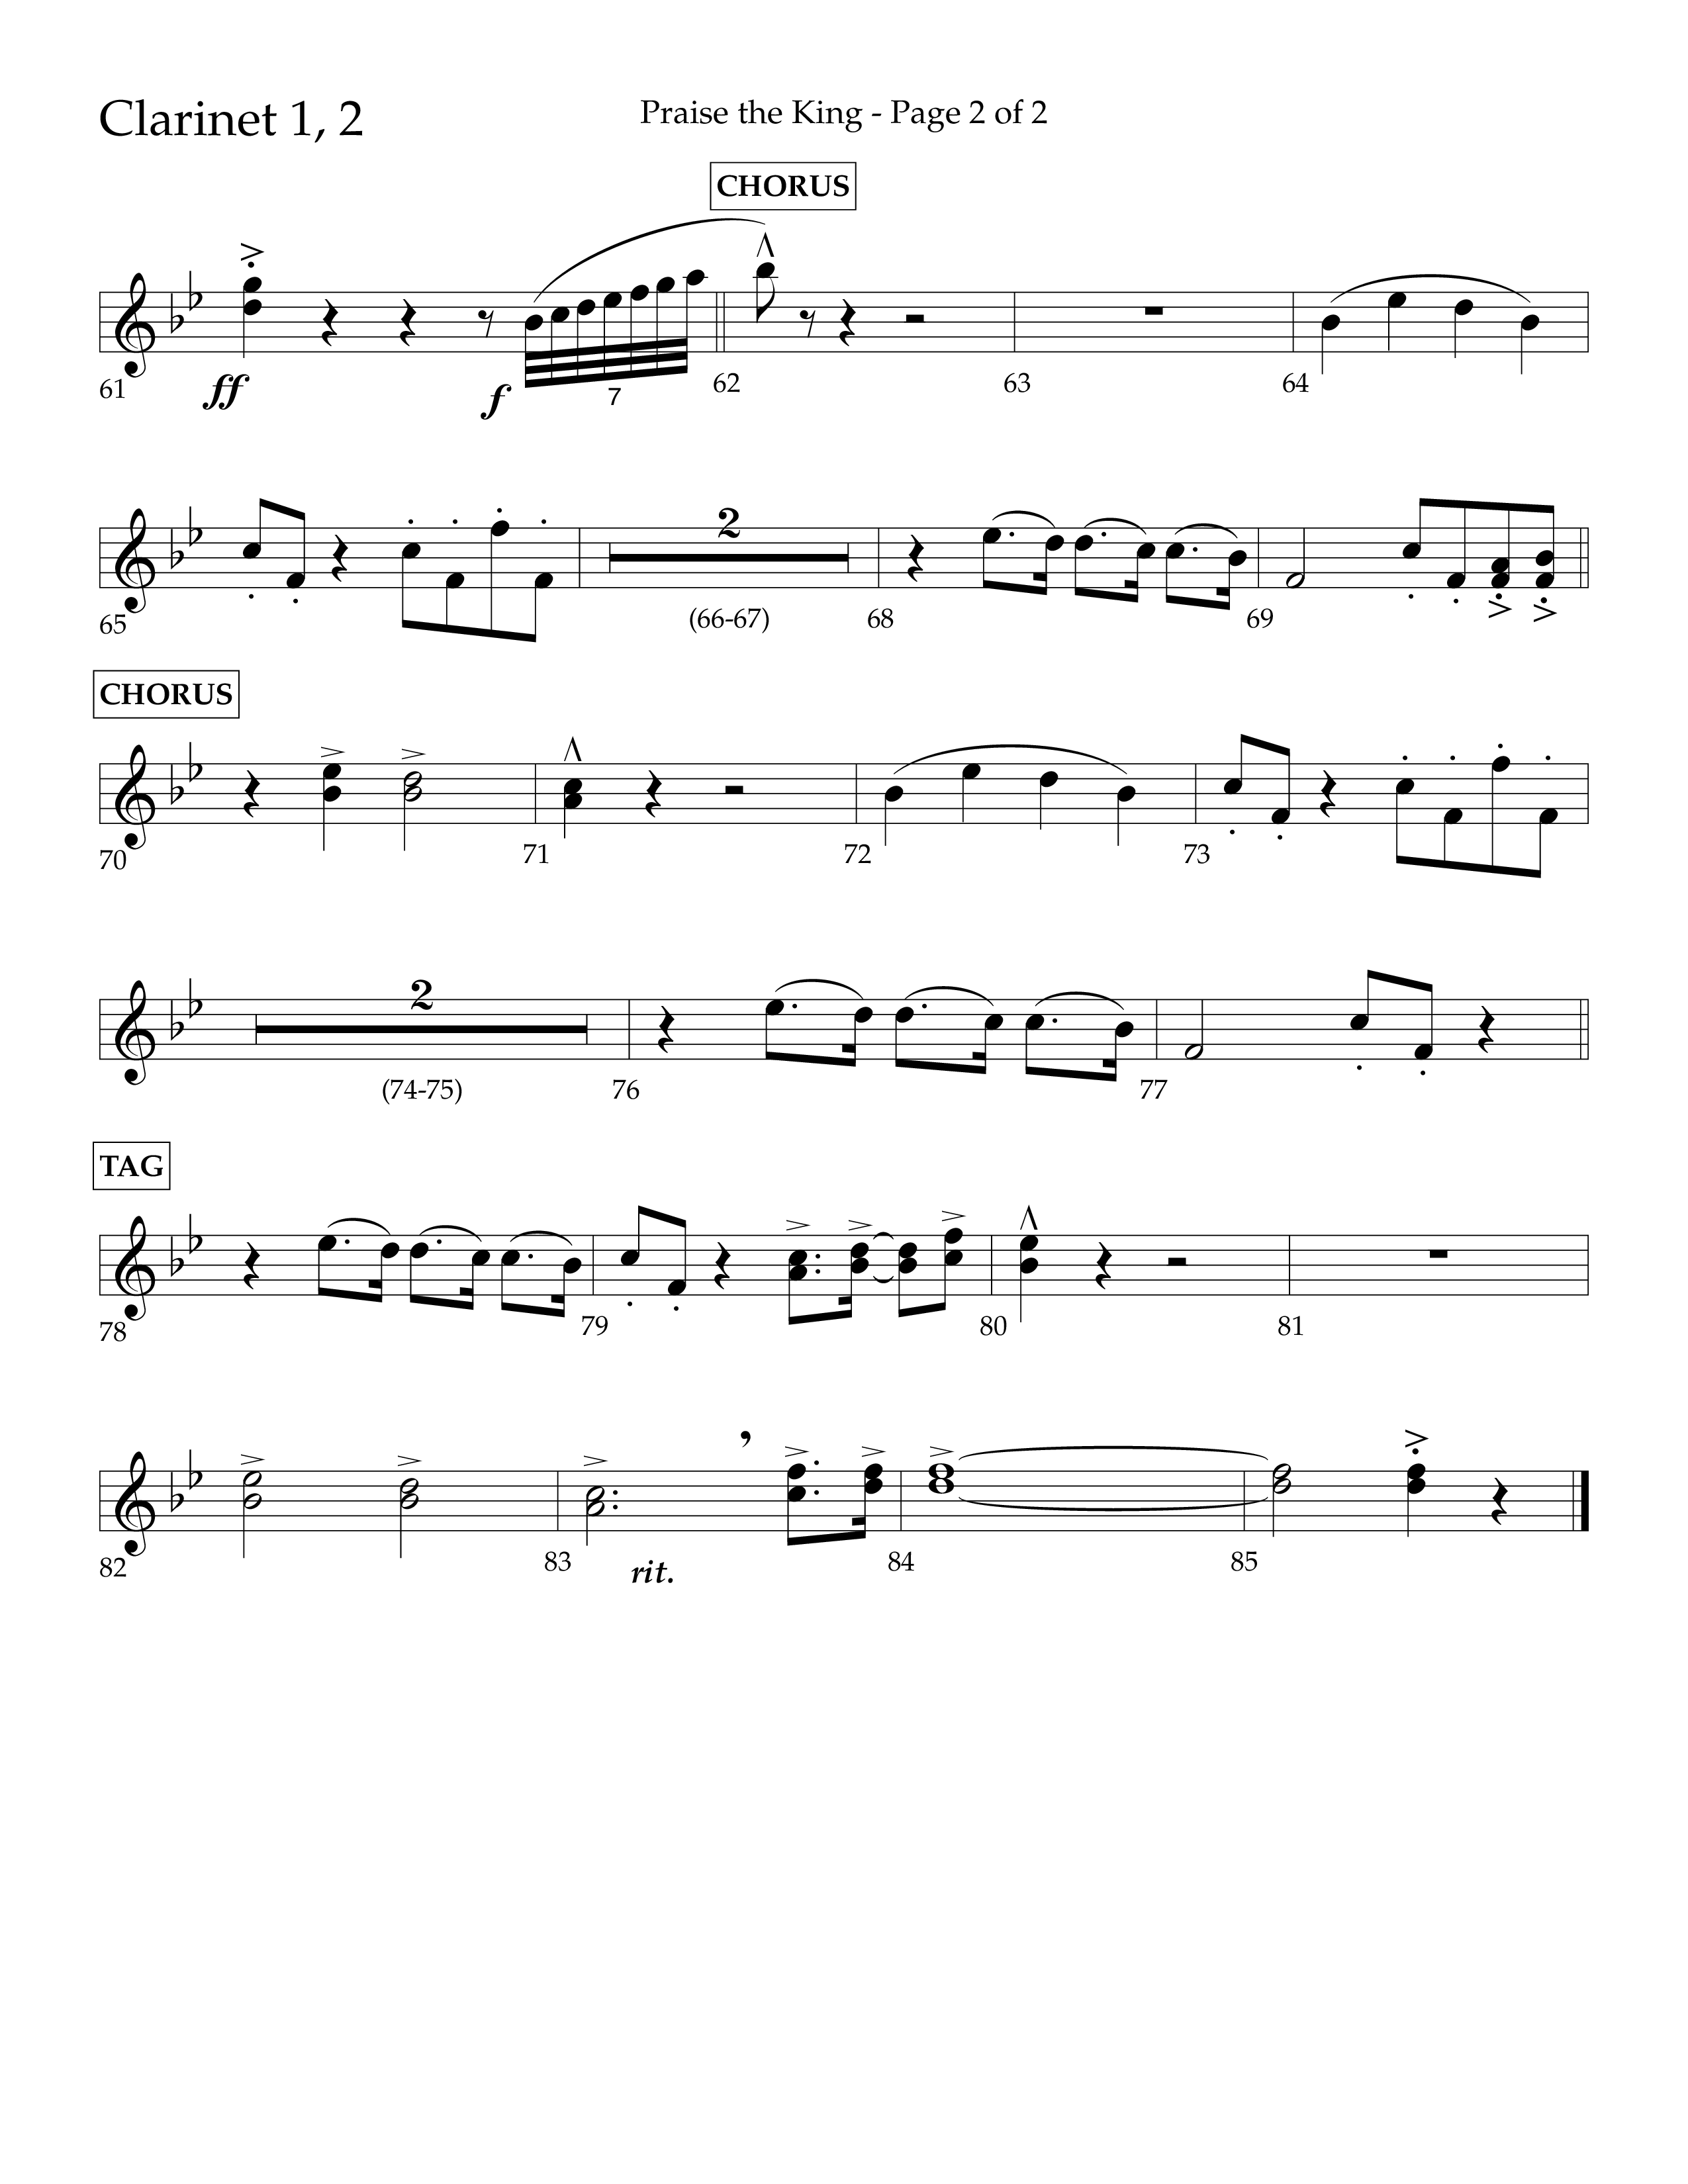 Praise The King (Choral Anthem SATB) Clarinet 1/2 (Lifeway Choral / Arr. Phil Nitz)